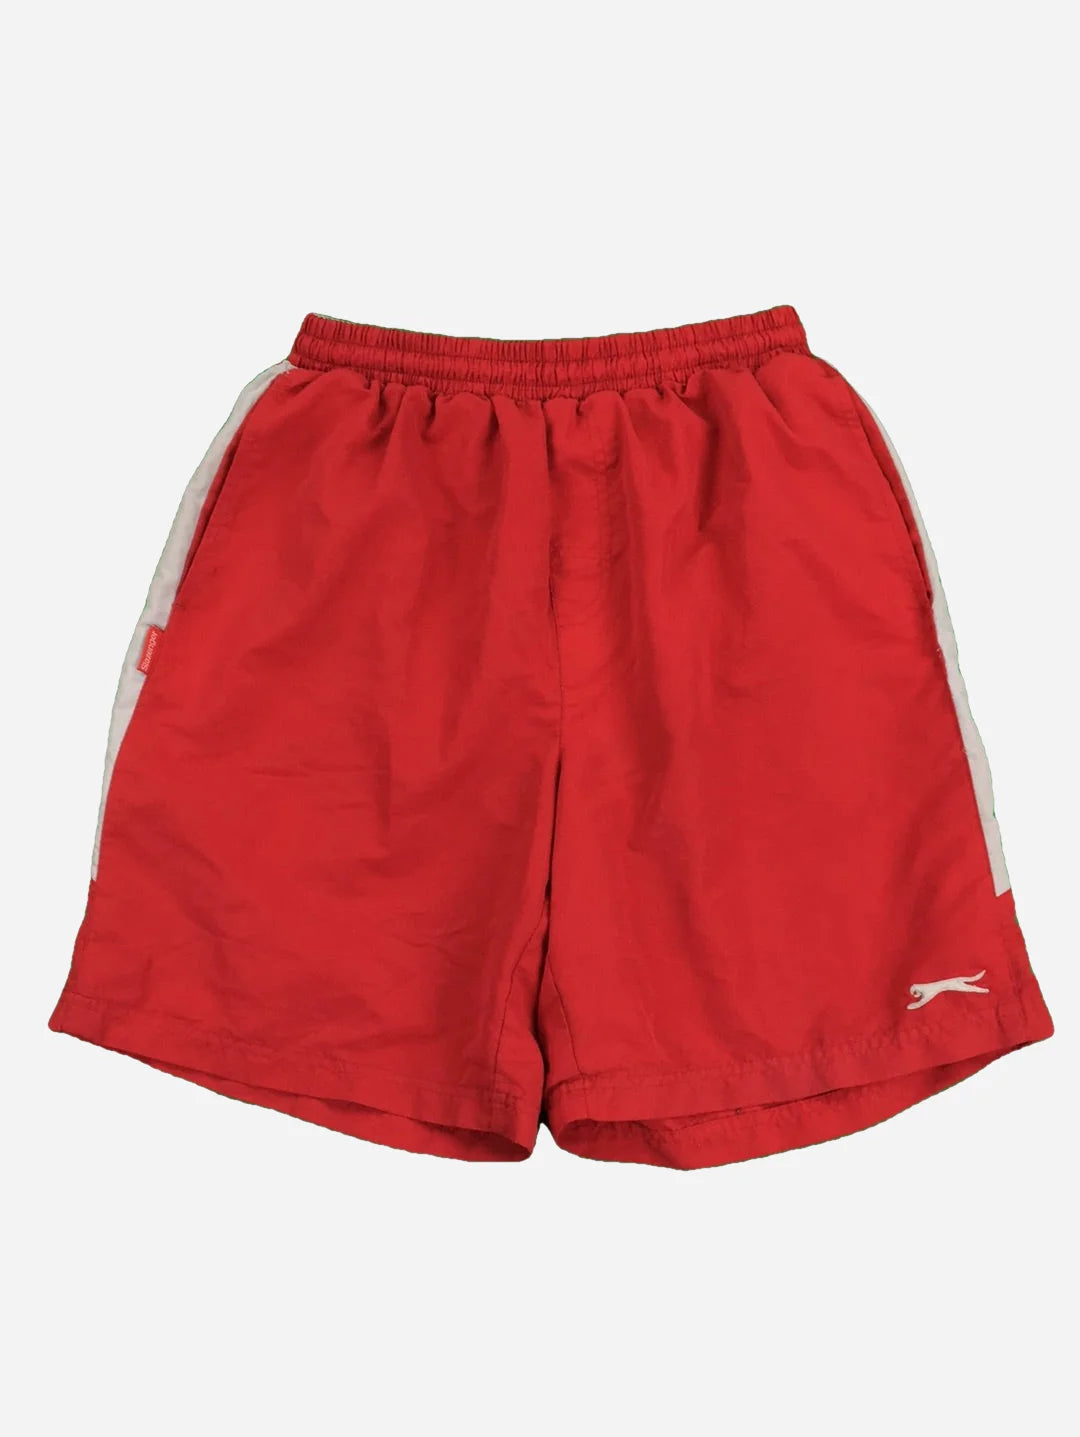 Slazenger Sports Shorts (M)